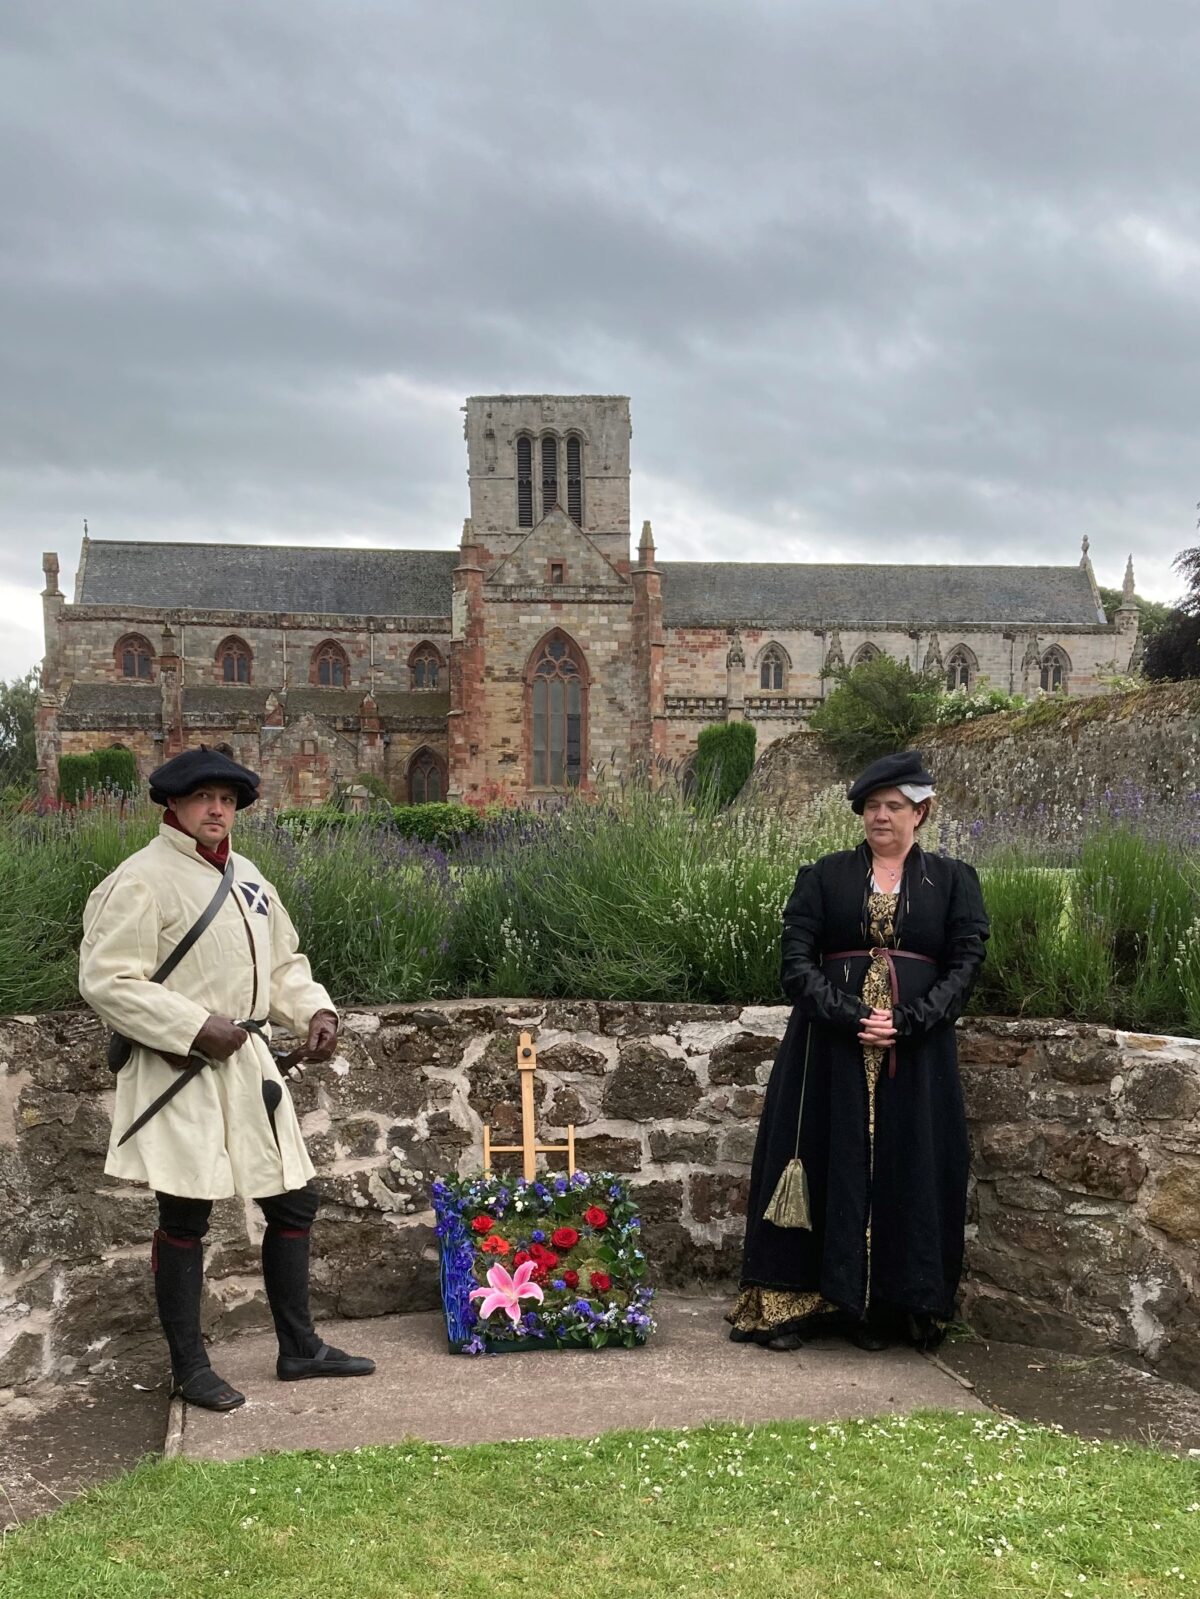 Wreath commemorating Siege of Haddington laid 28th June 2022